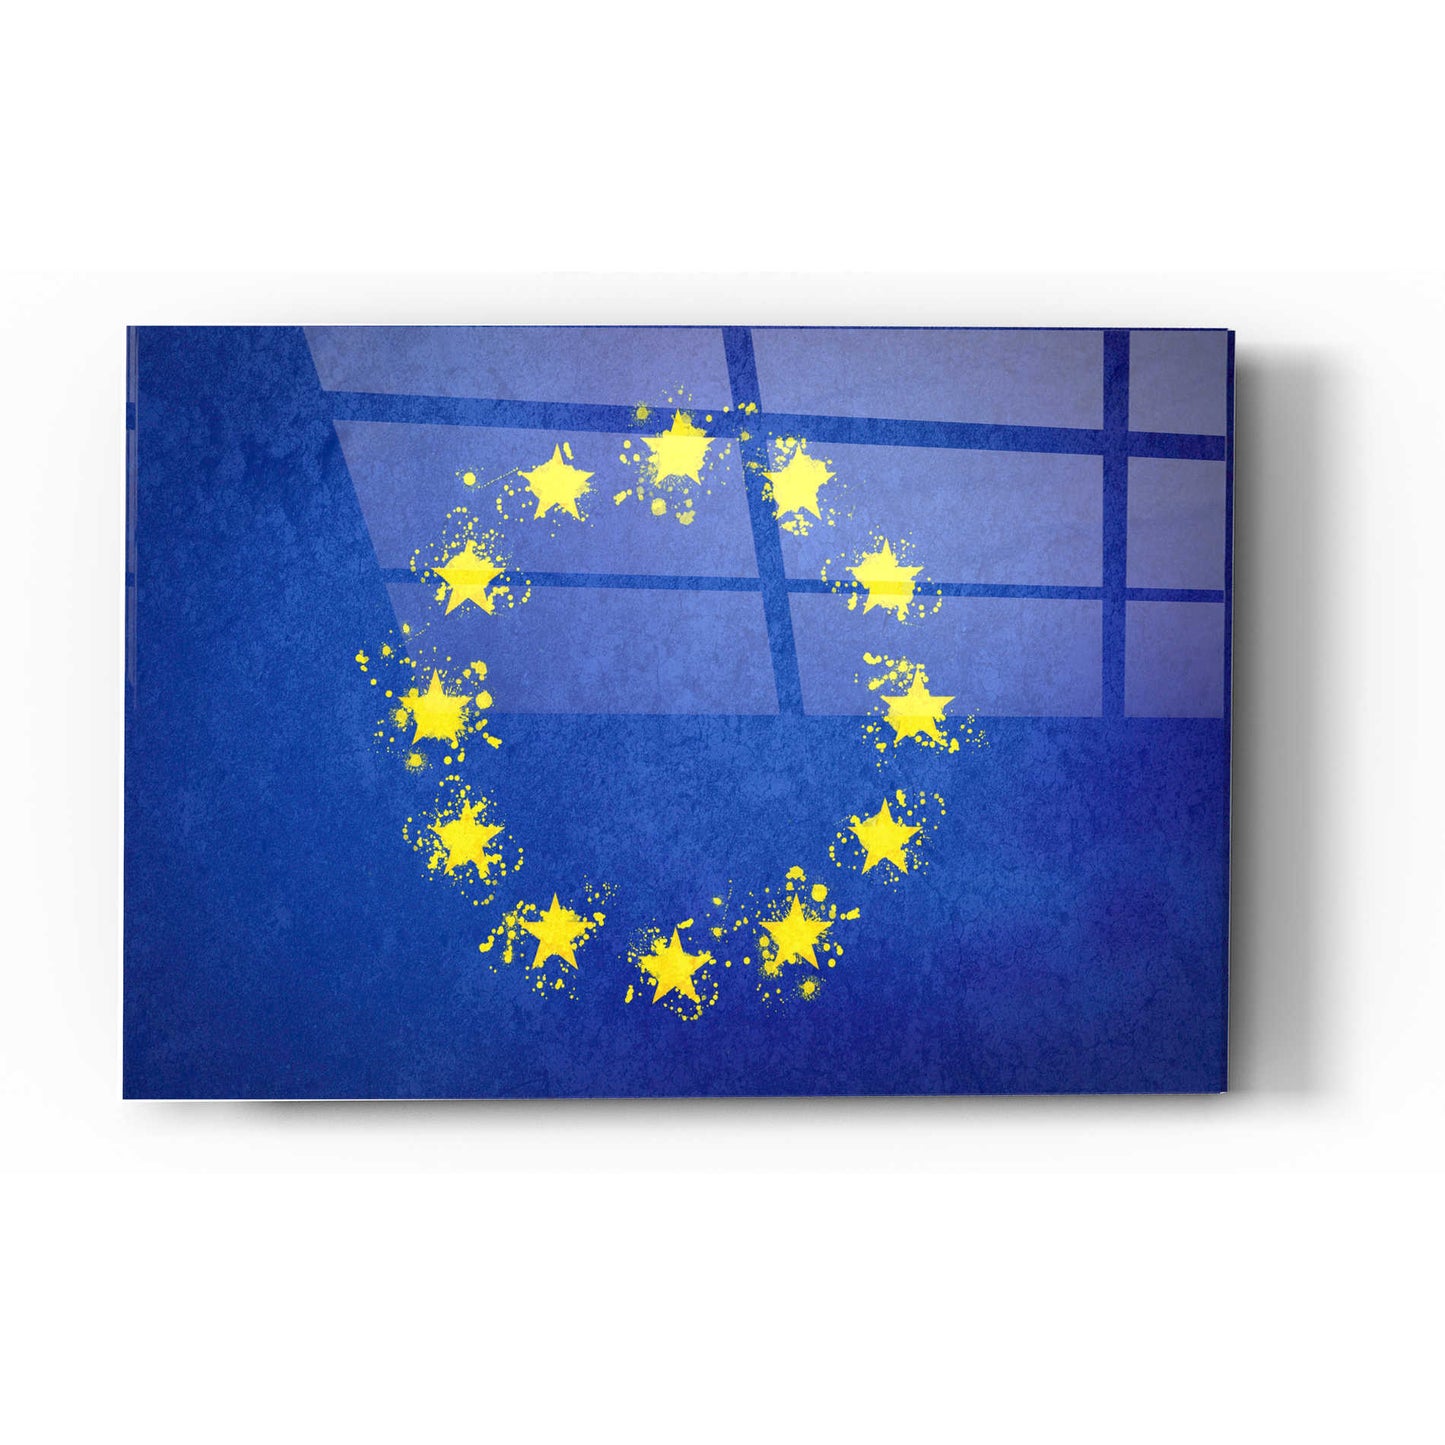 Epic Art "European Union" Acrylic Glass Wall Art,24x36